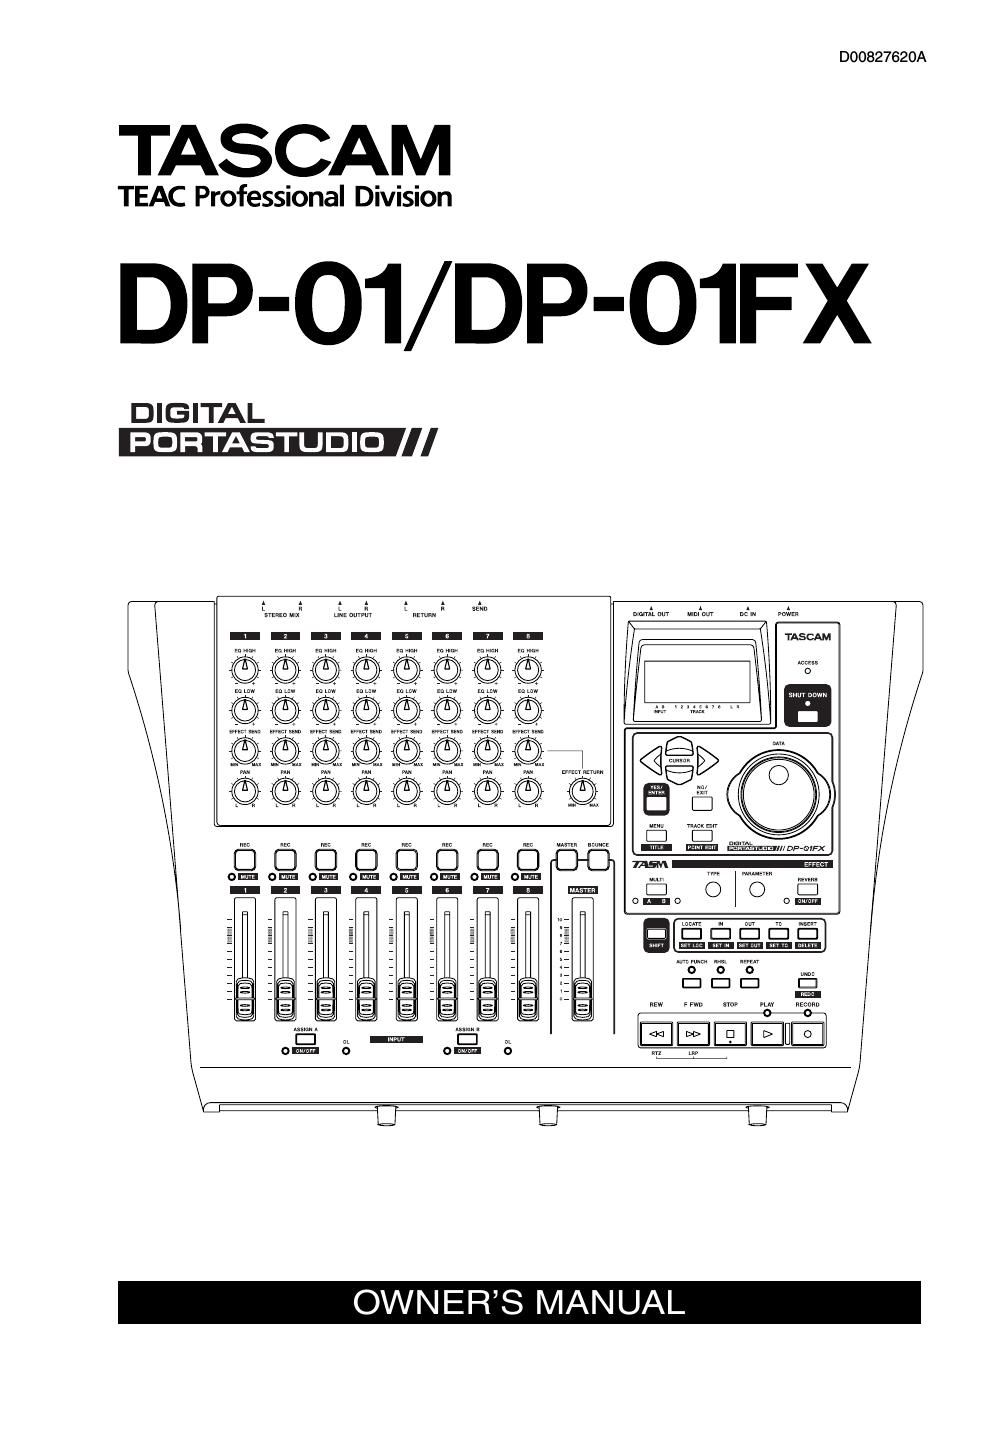 Tascam DP 01 Owners Manual